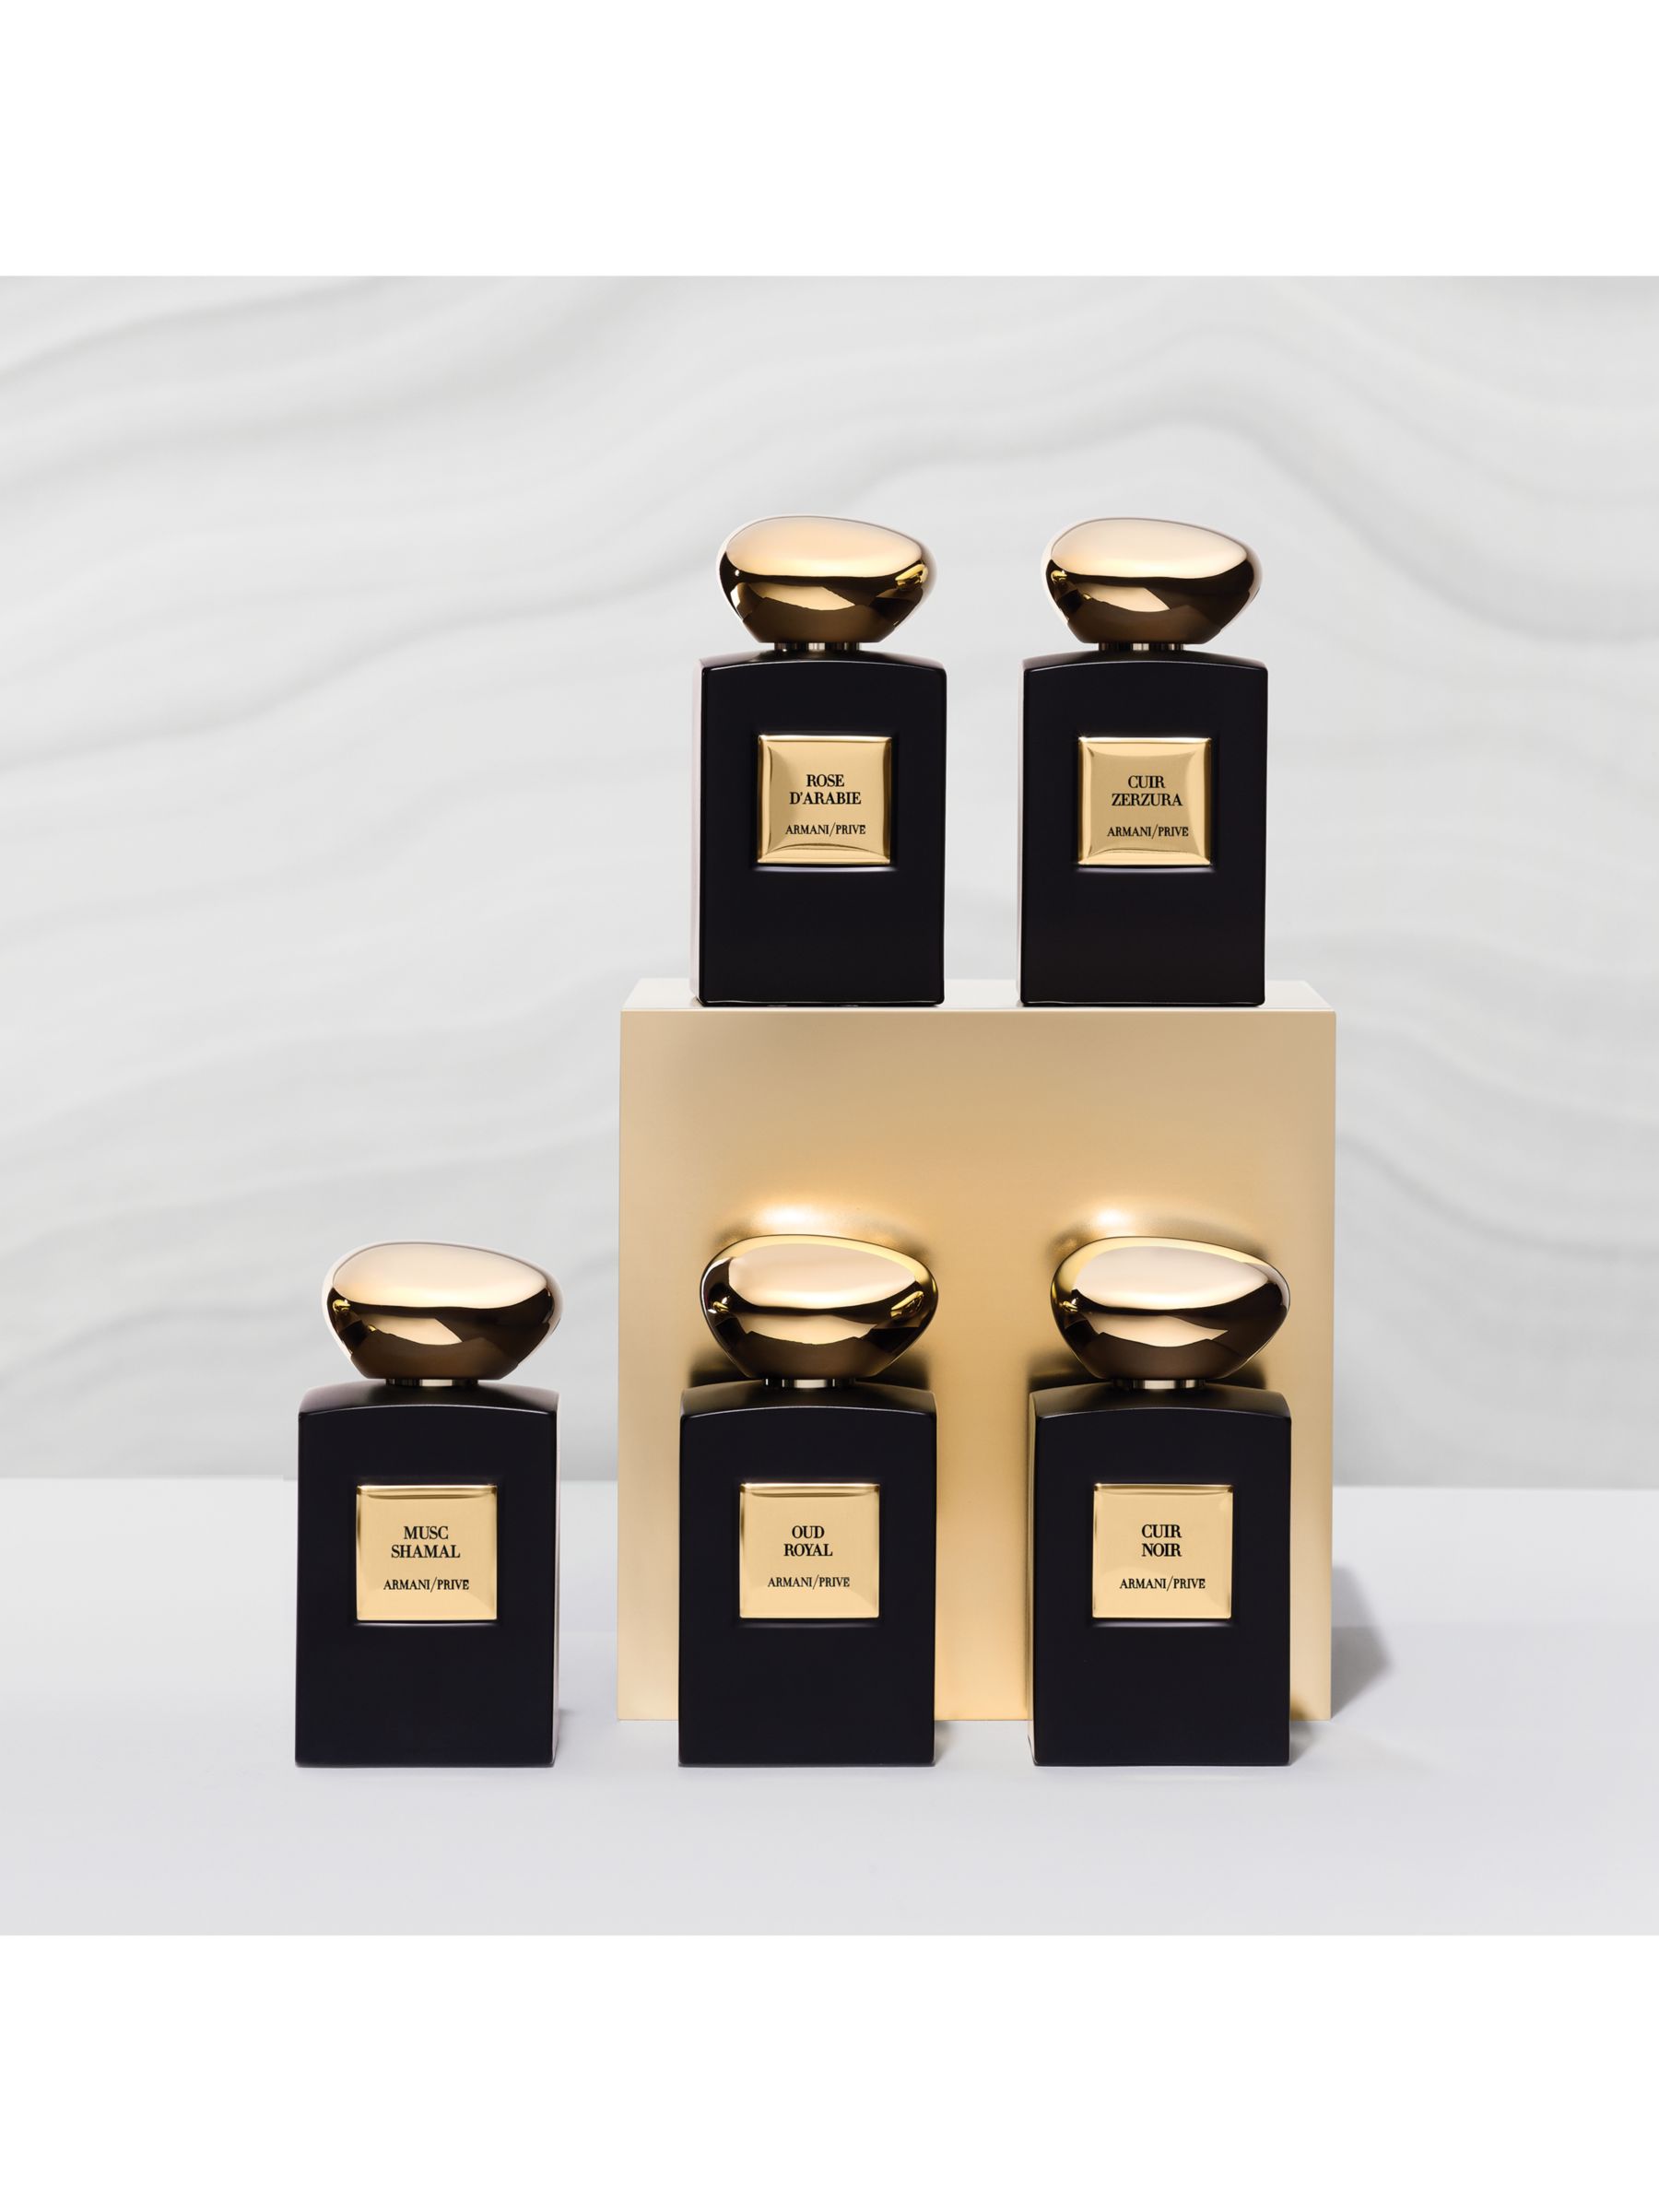 Giorgio Armani / Privé Oud Royal Eau de Parfum, 100ml at John Lewis &  Partners